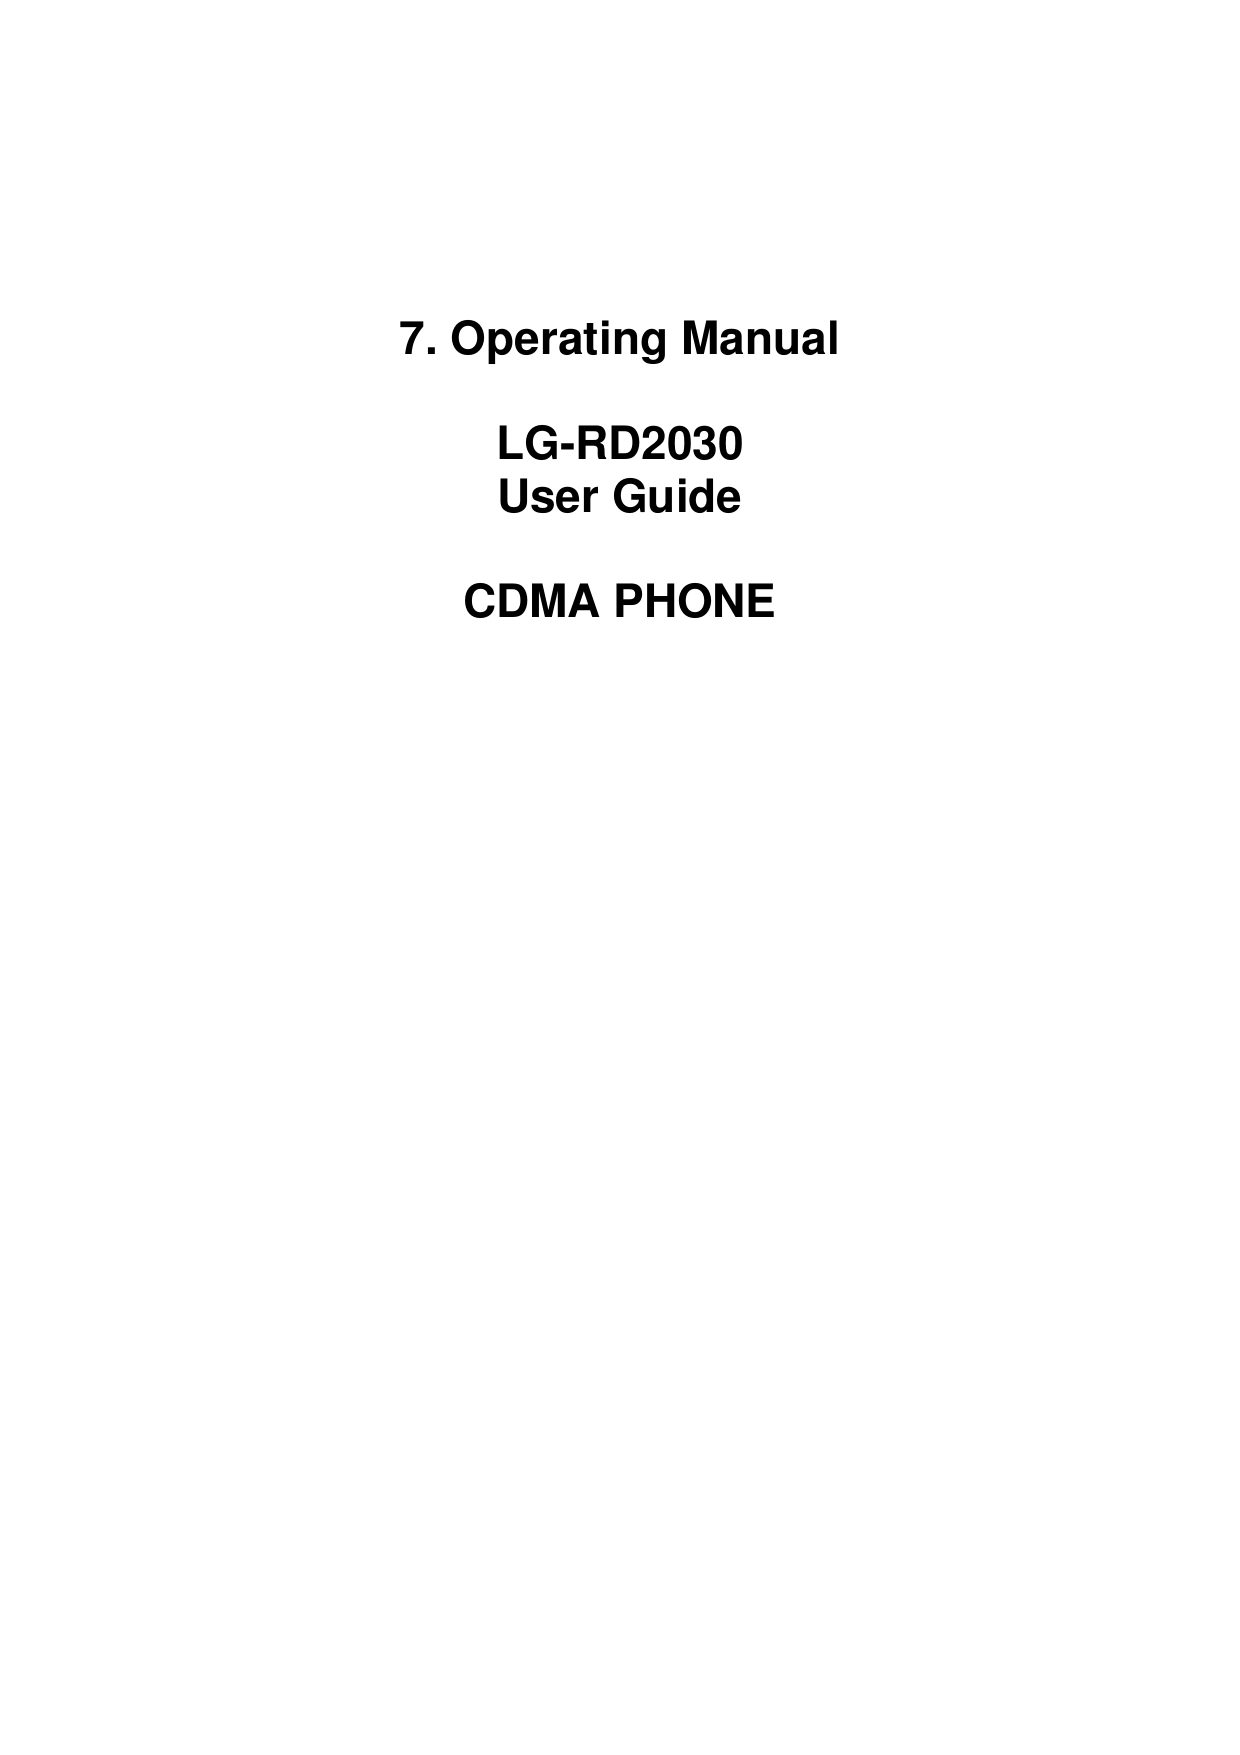   7. Operating Manual  LG-RD2030 User Guide  CDMA PHONE                          